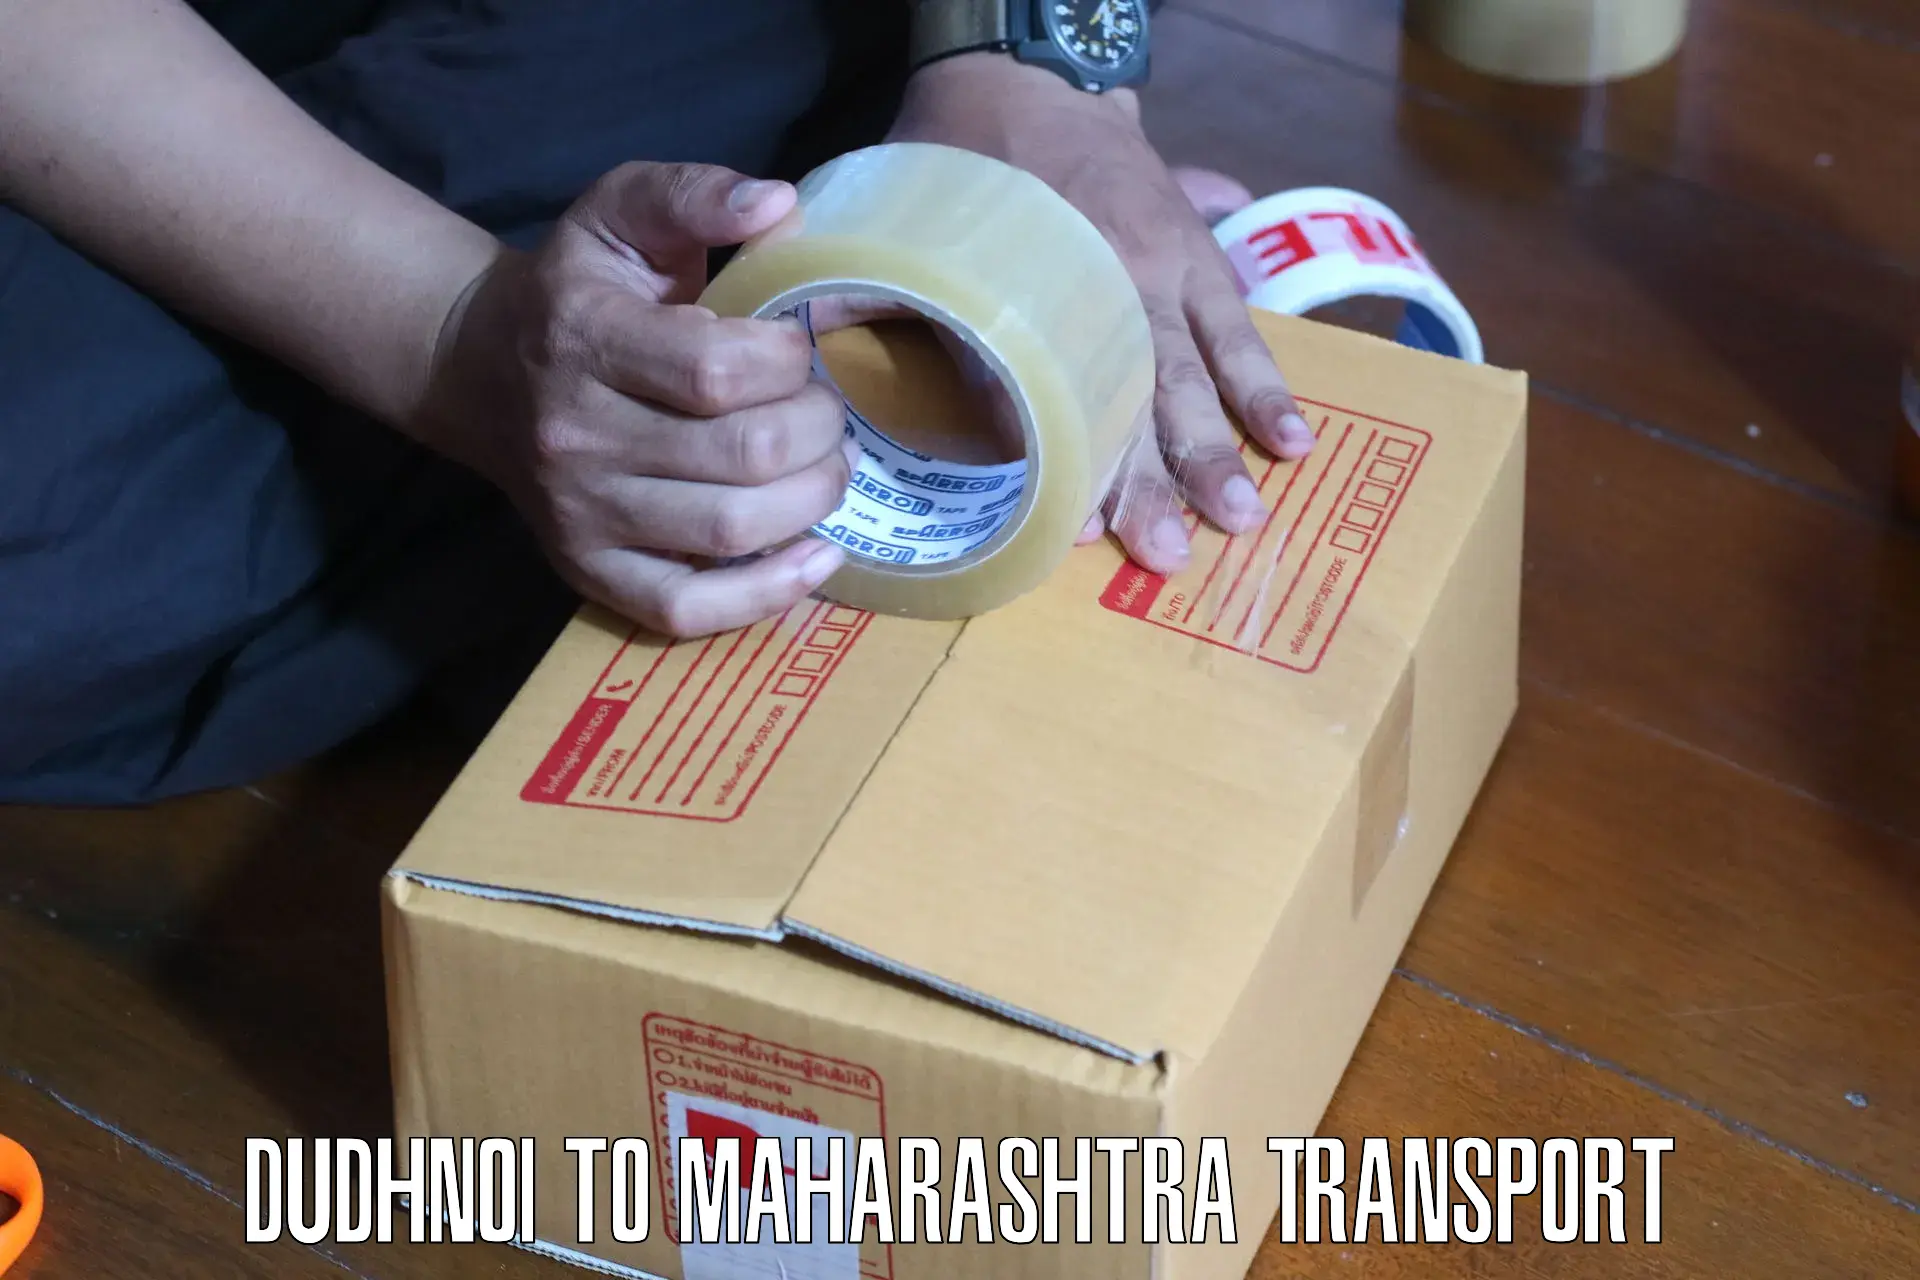 Shipping partner Dudhnoi to Maharashtra